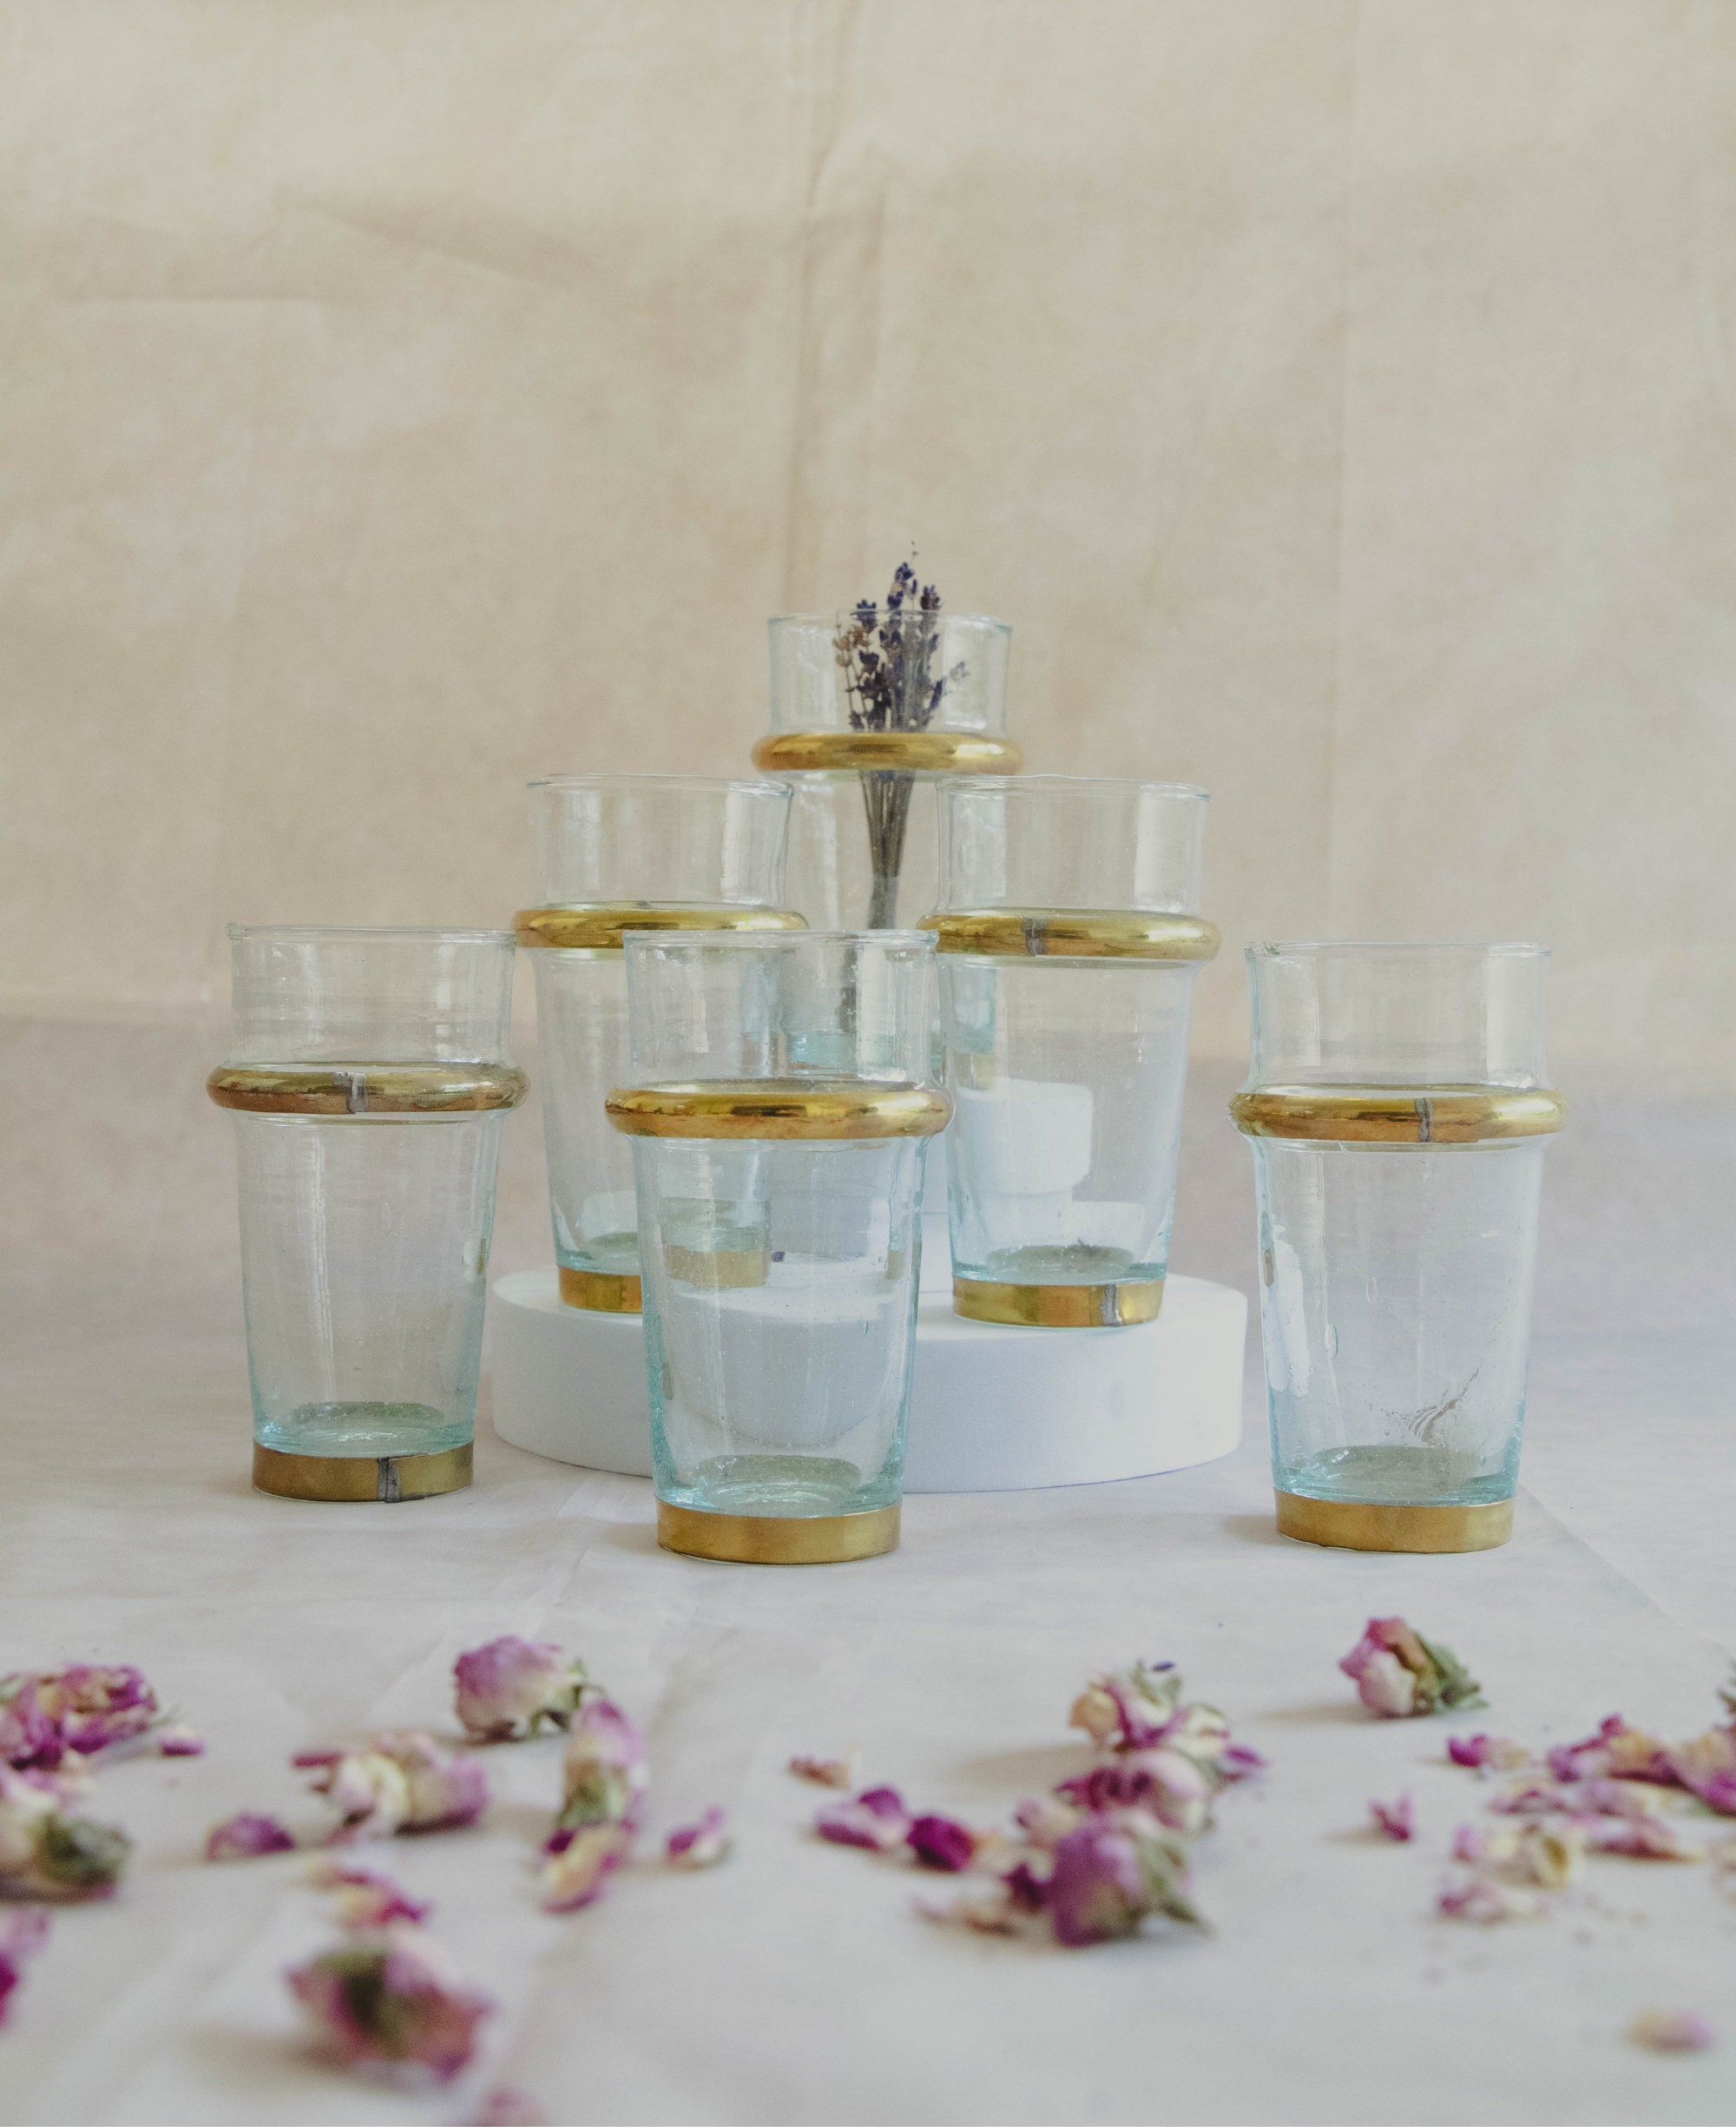 Vtg Green Gold Moroccan Tea Glass Tumbler Cup Arch Floral Design Cheap!